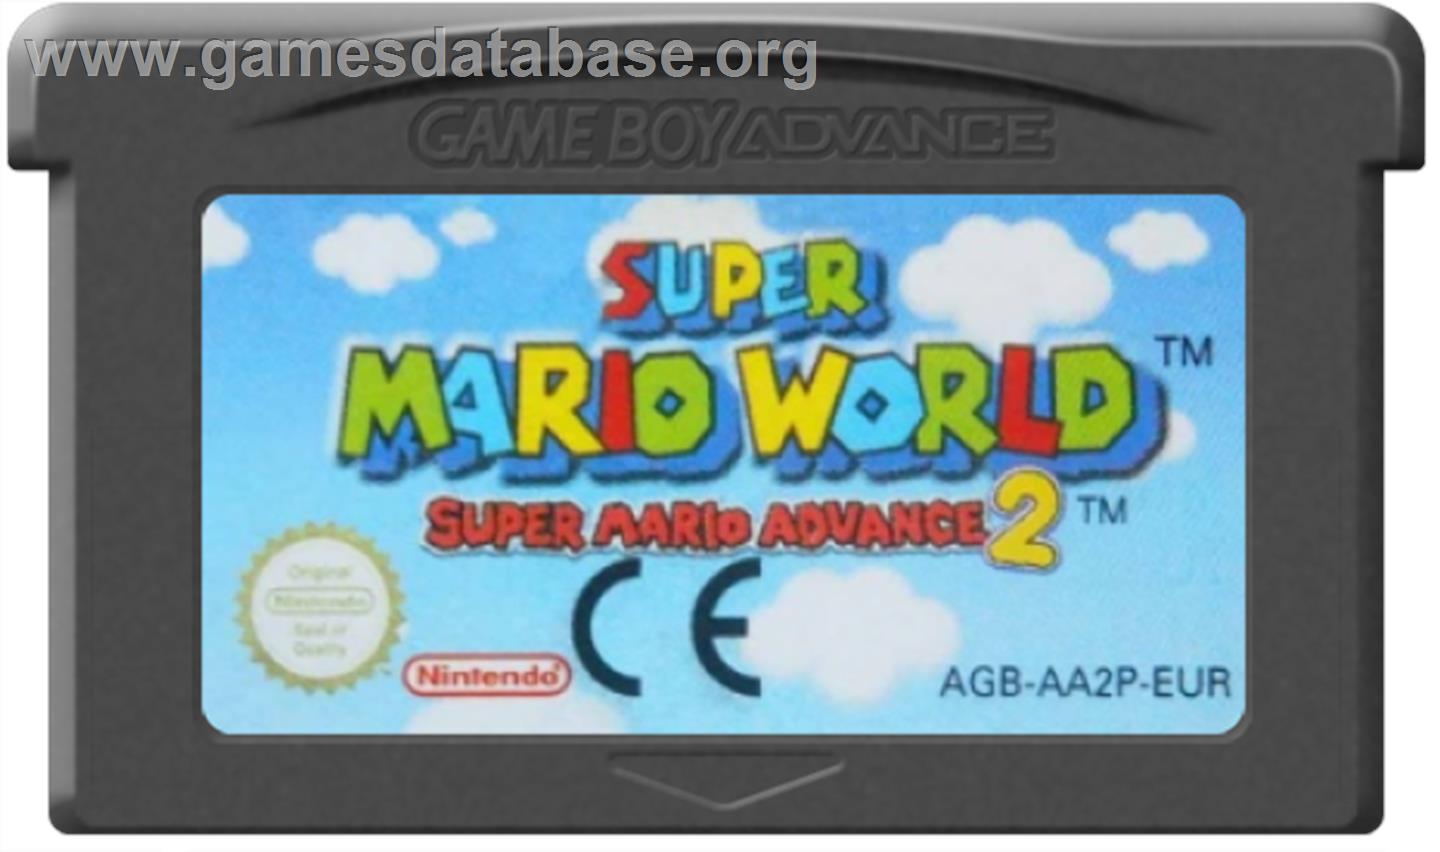 Super Mario World: Super Mario Advance 2 - Nintendo Game Boy Advance - Artwork - Cartridge